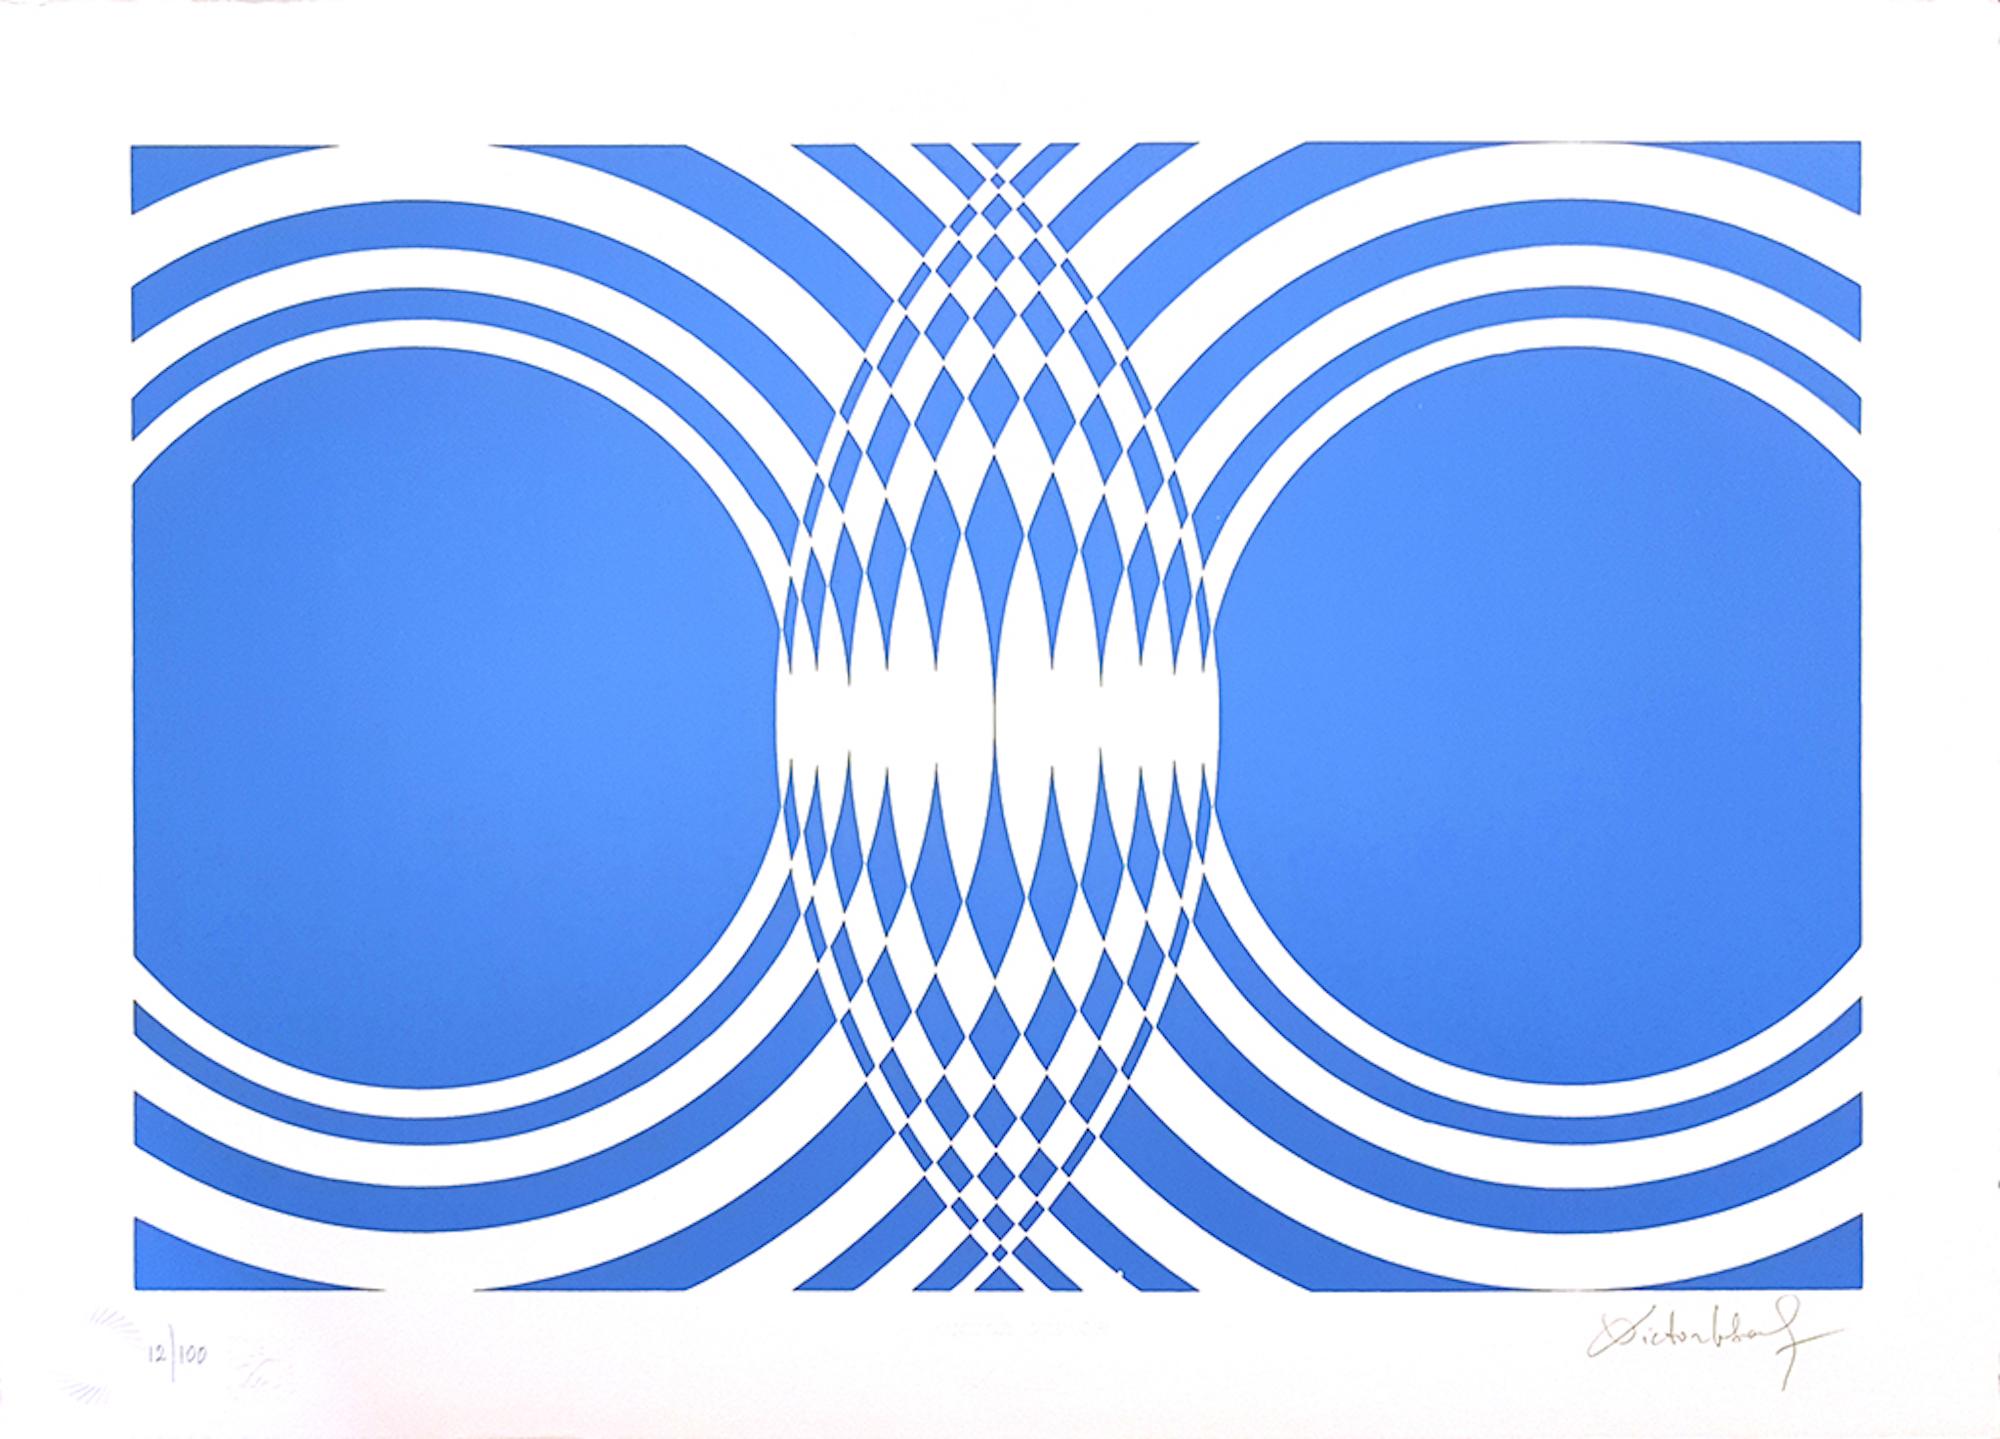 Victor Debach Abstract Print - Blue Composition - Screen Print by V. Debach - 1970s